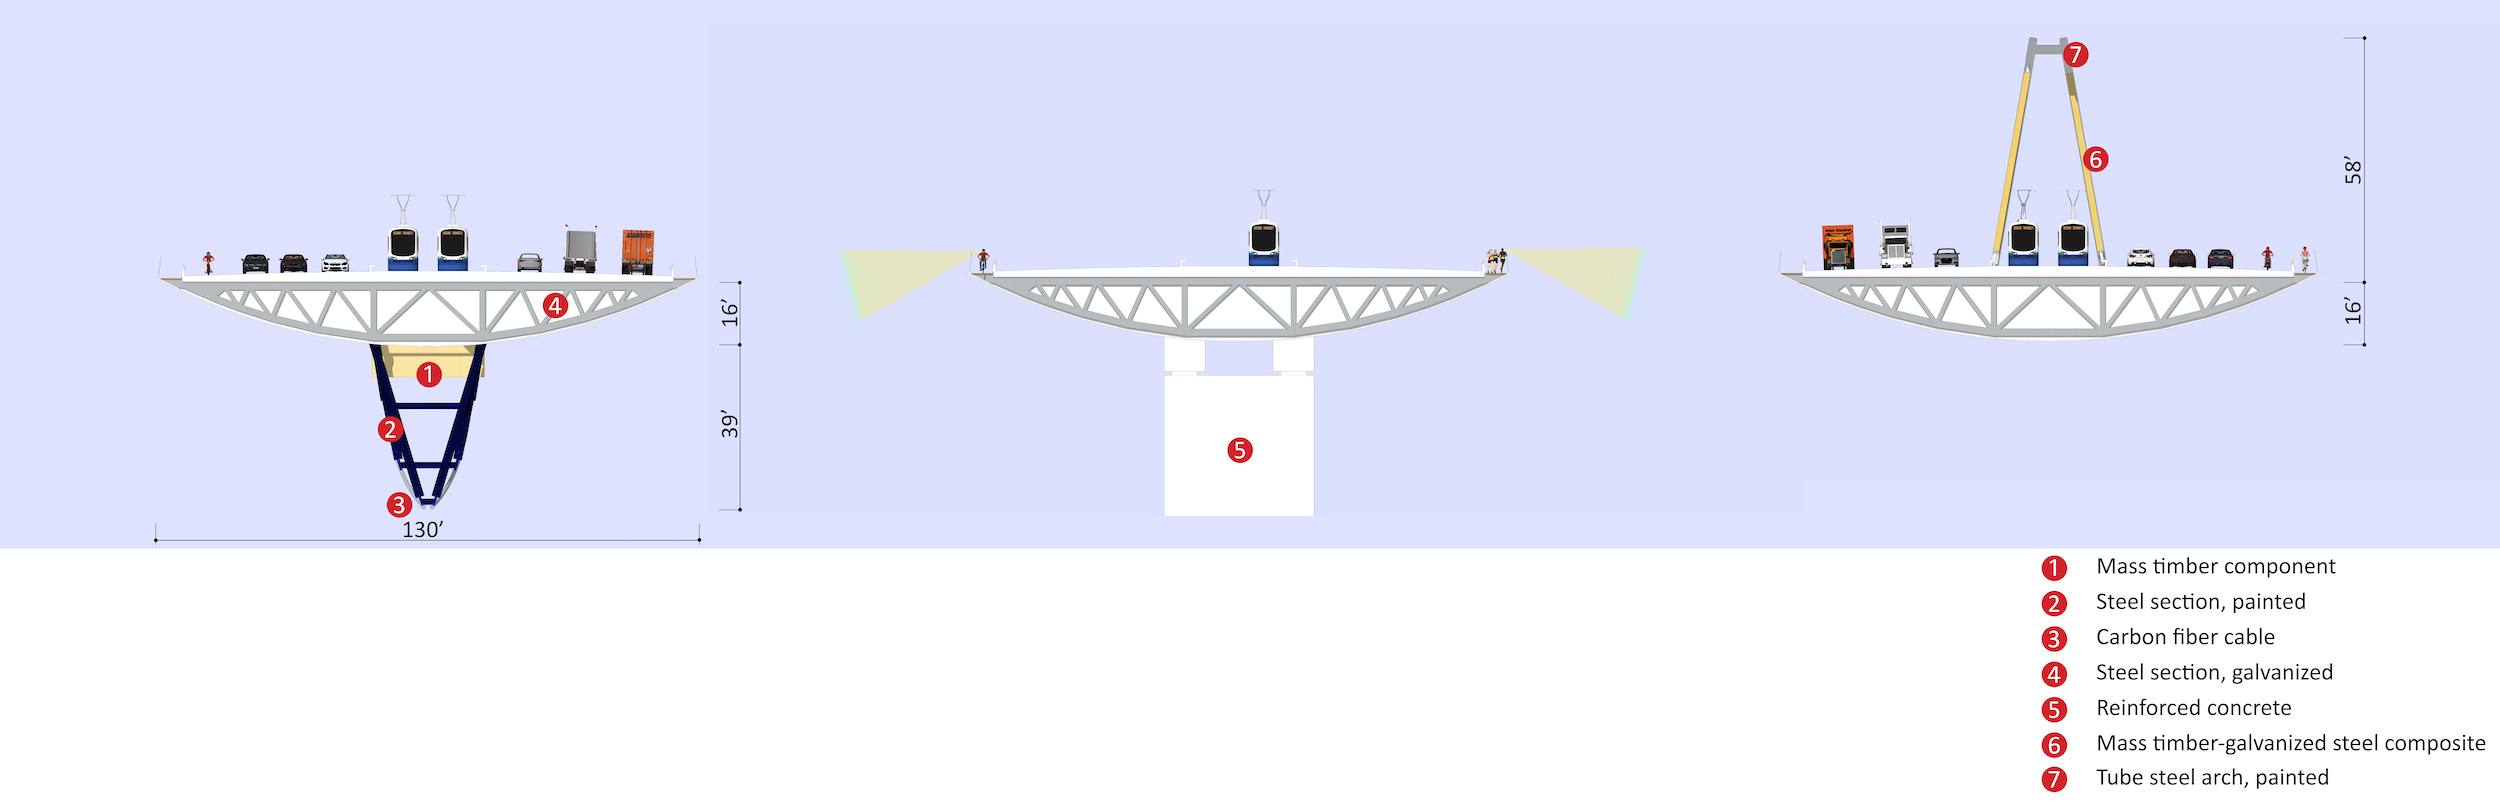 composite illustration of a bridge